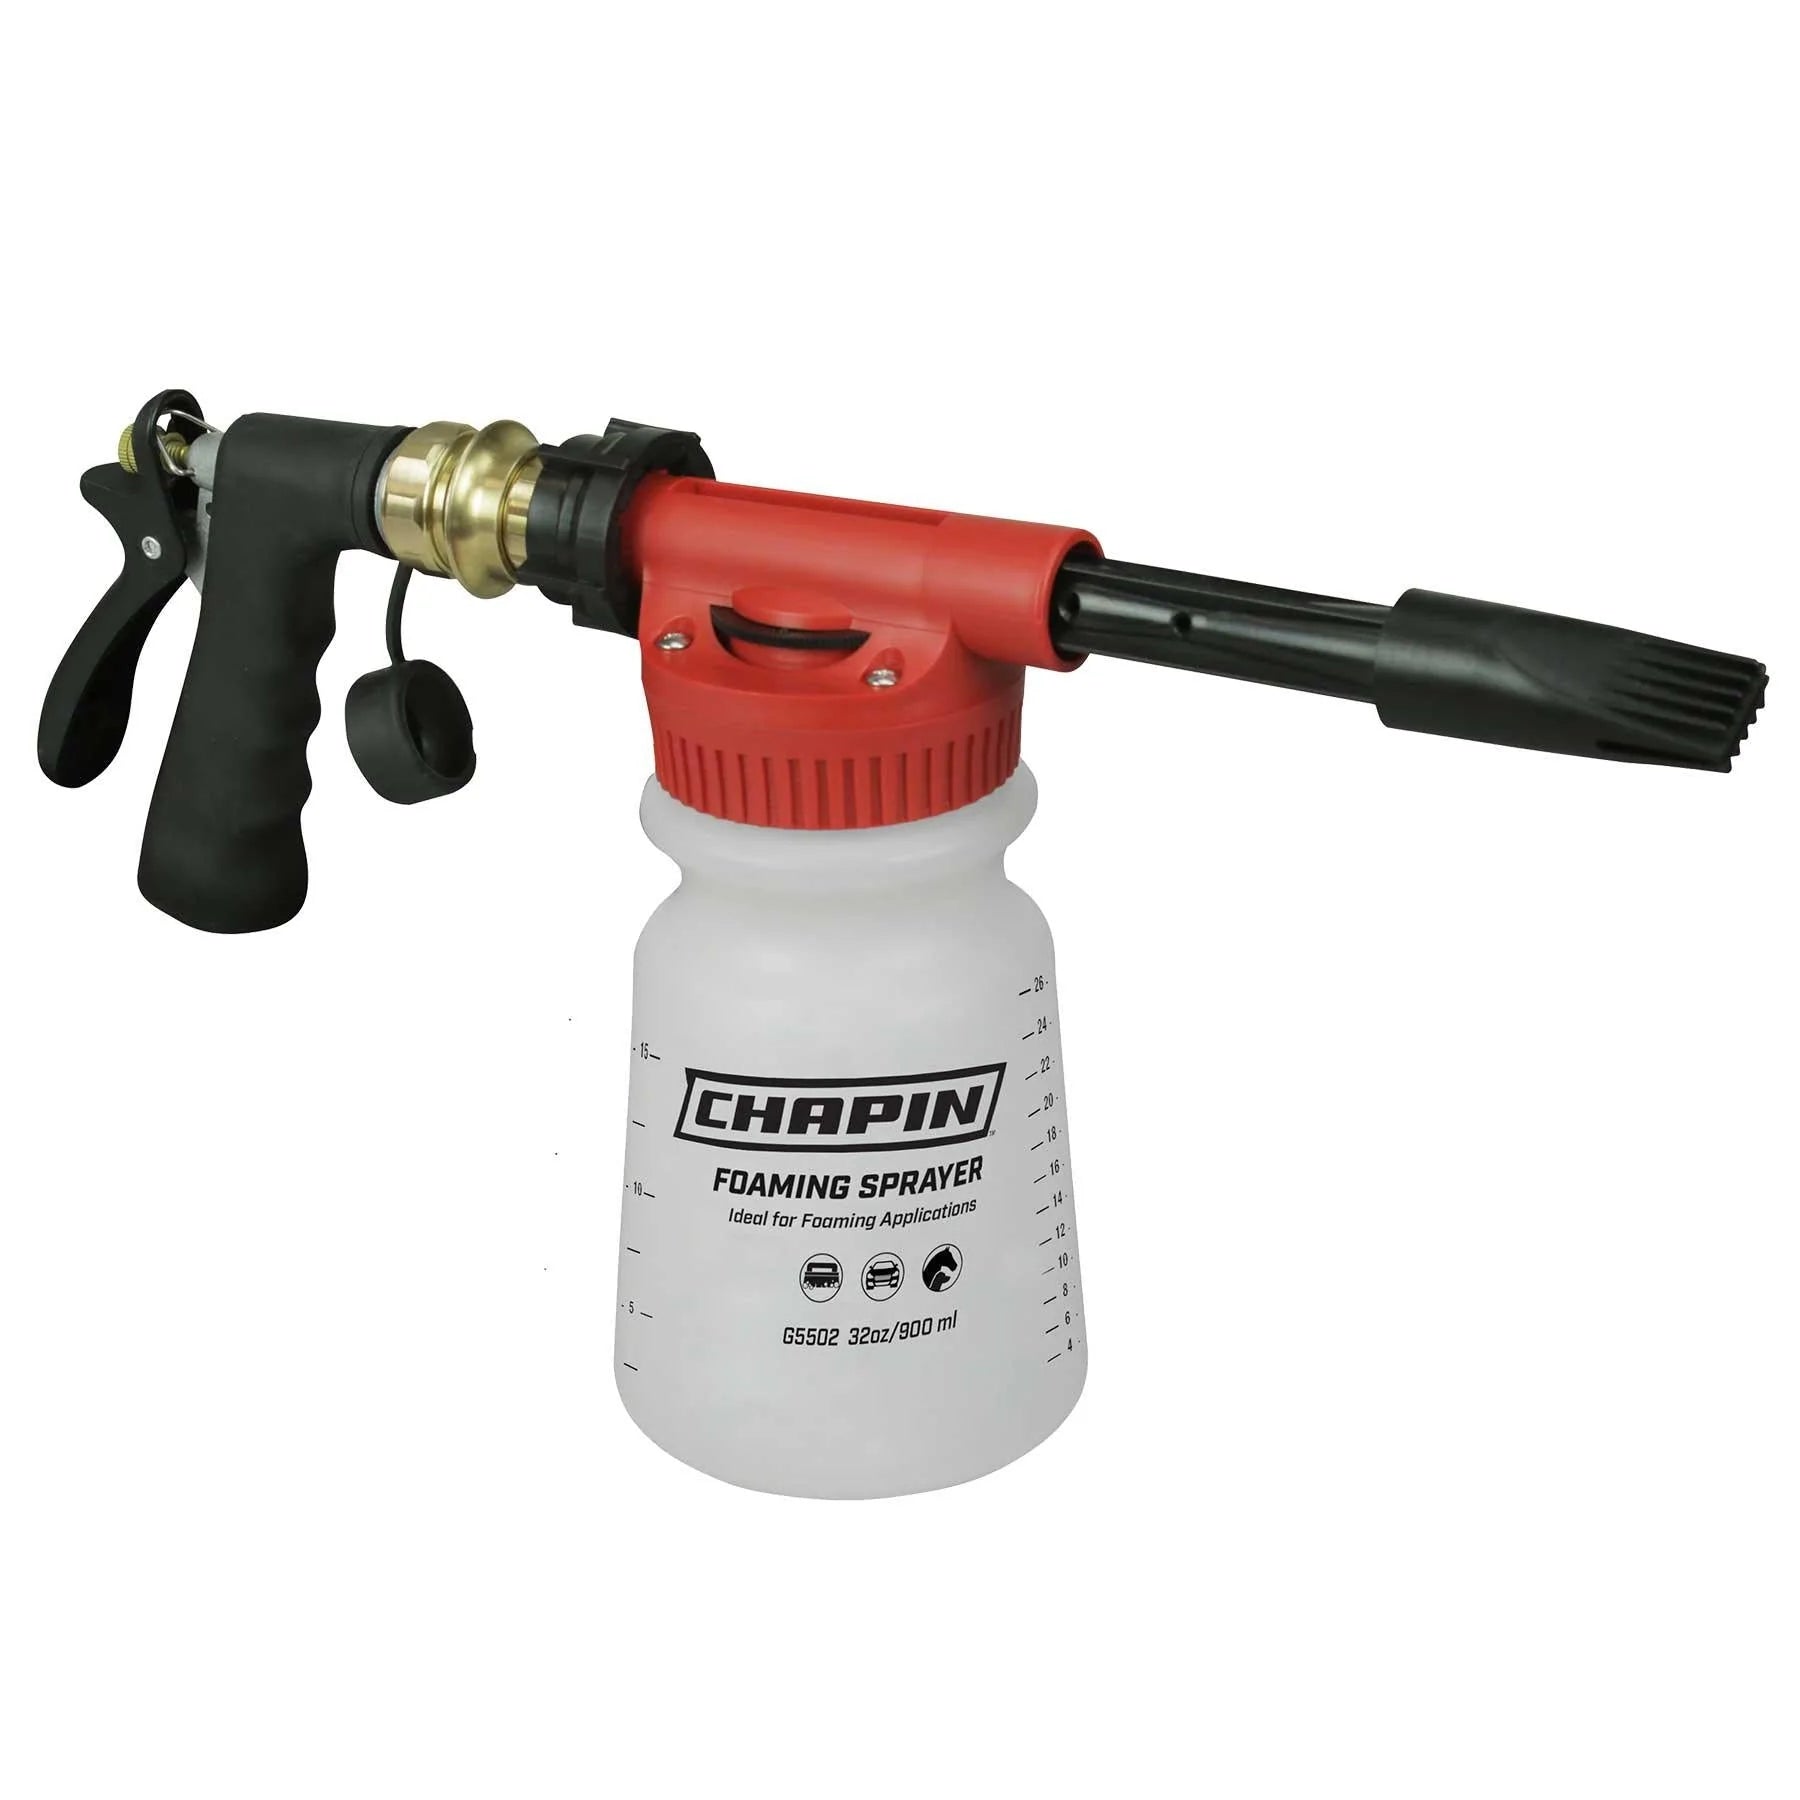 Car Care Foam Cleaner & Precision Water Pressure Nozzle for